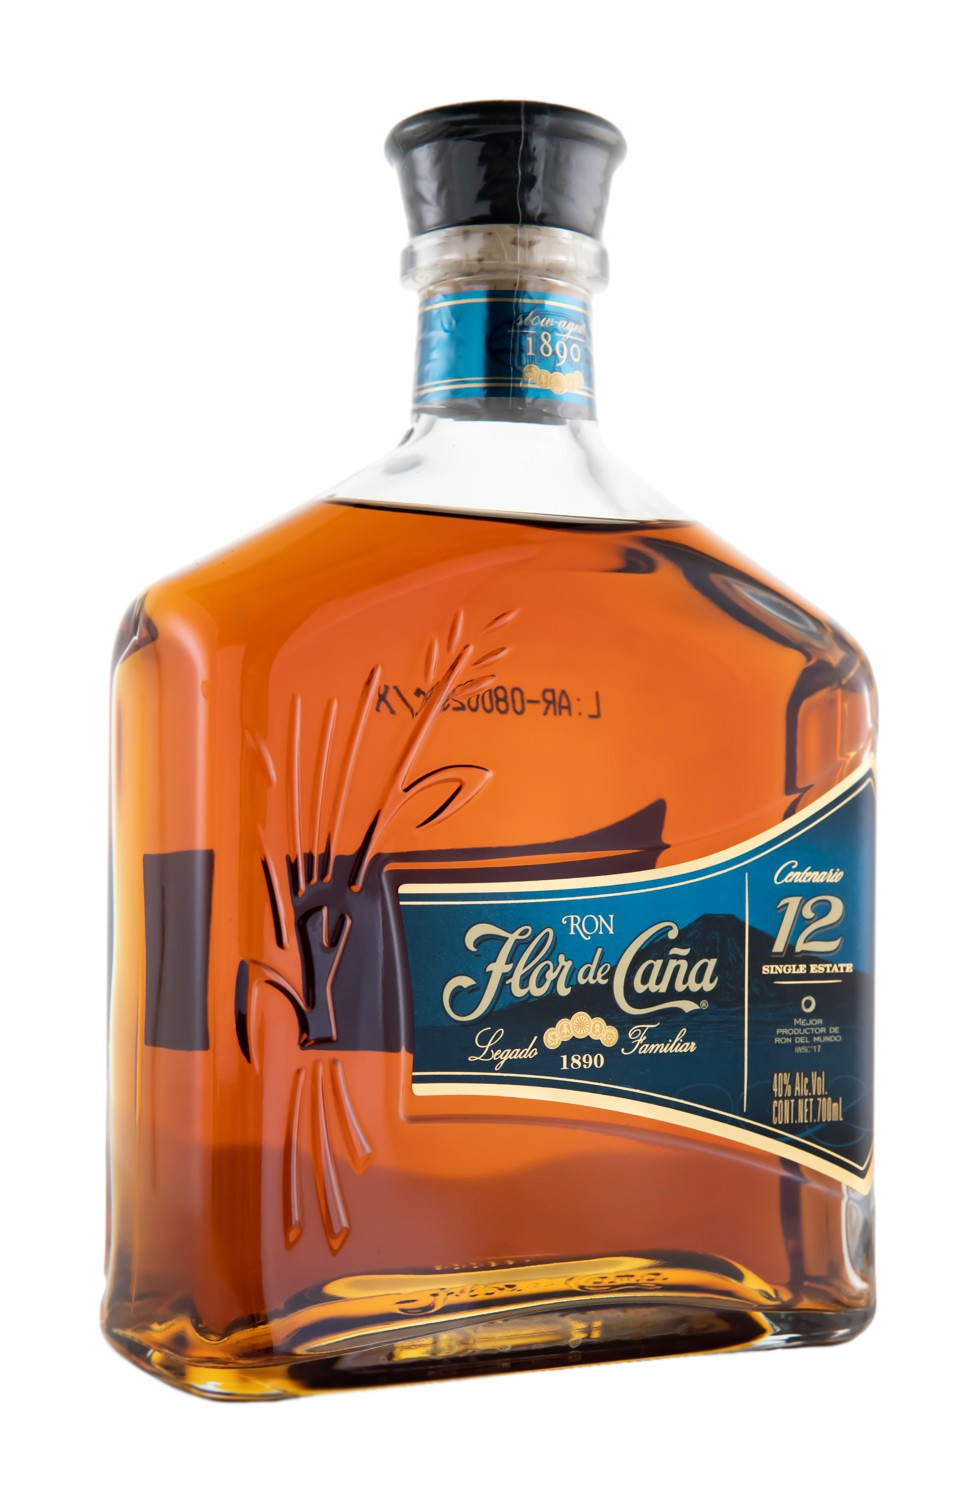 Cana Flor Rum 12 de Jahre Centenario